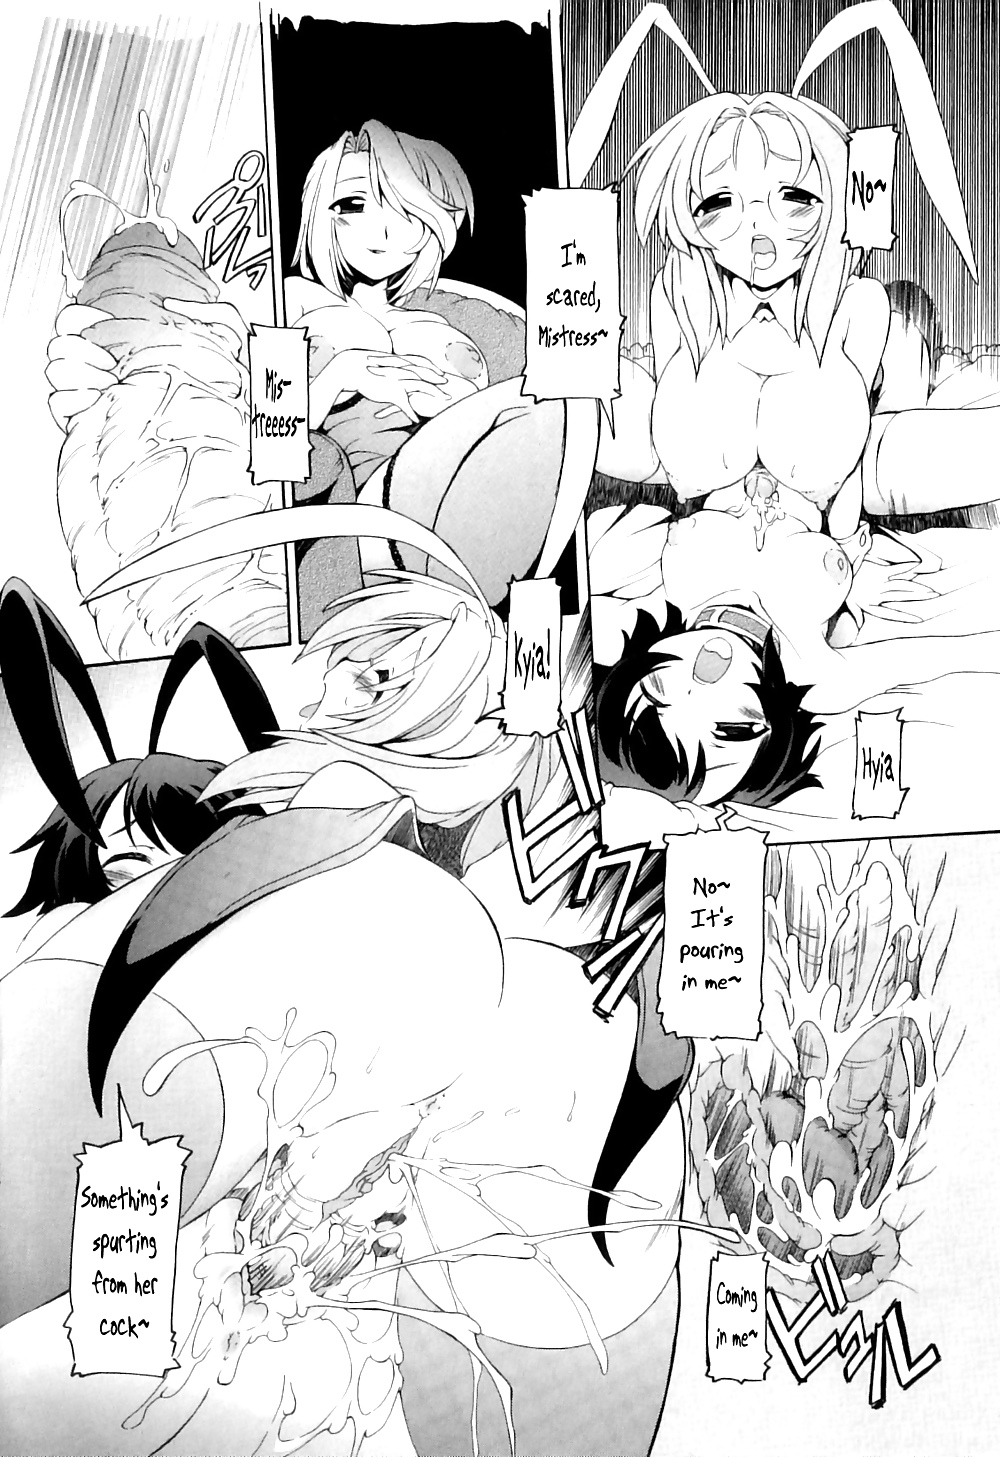 (comic hentai) futa comics by minakonami
 #22026884